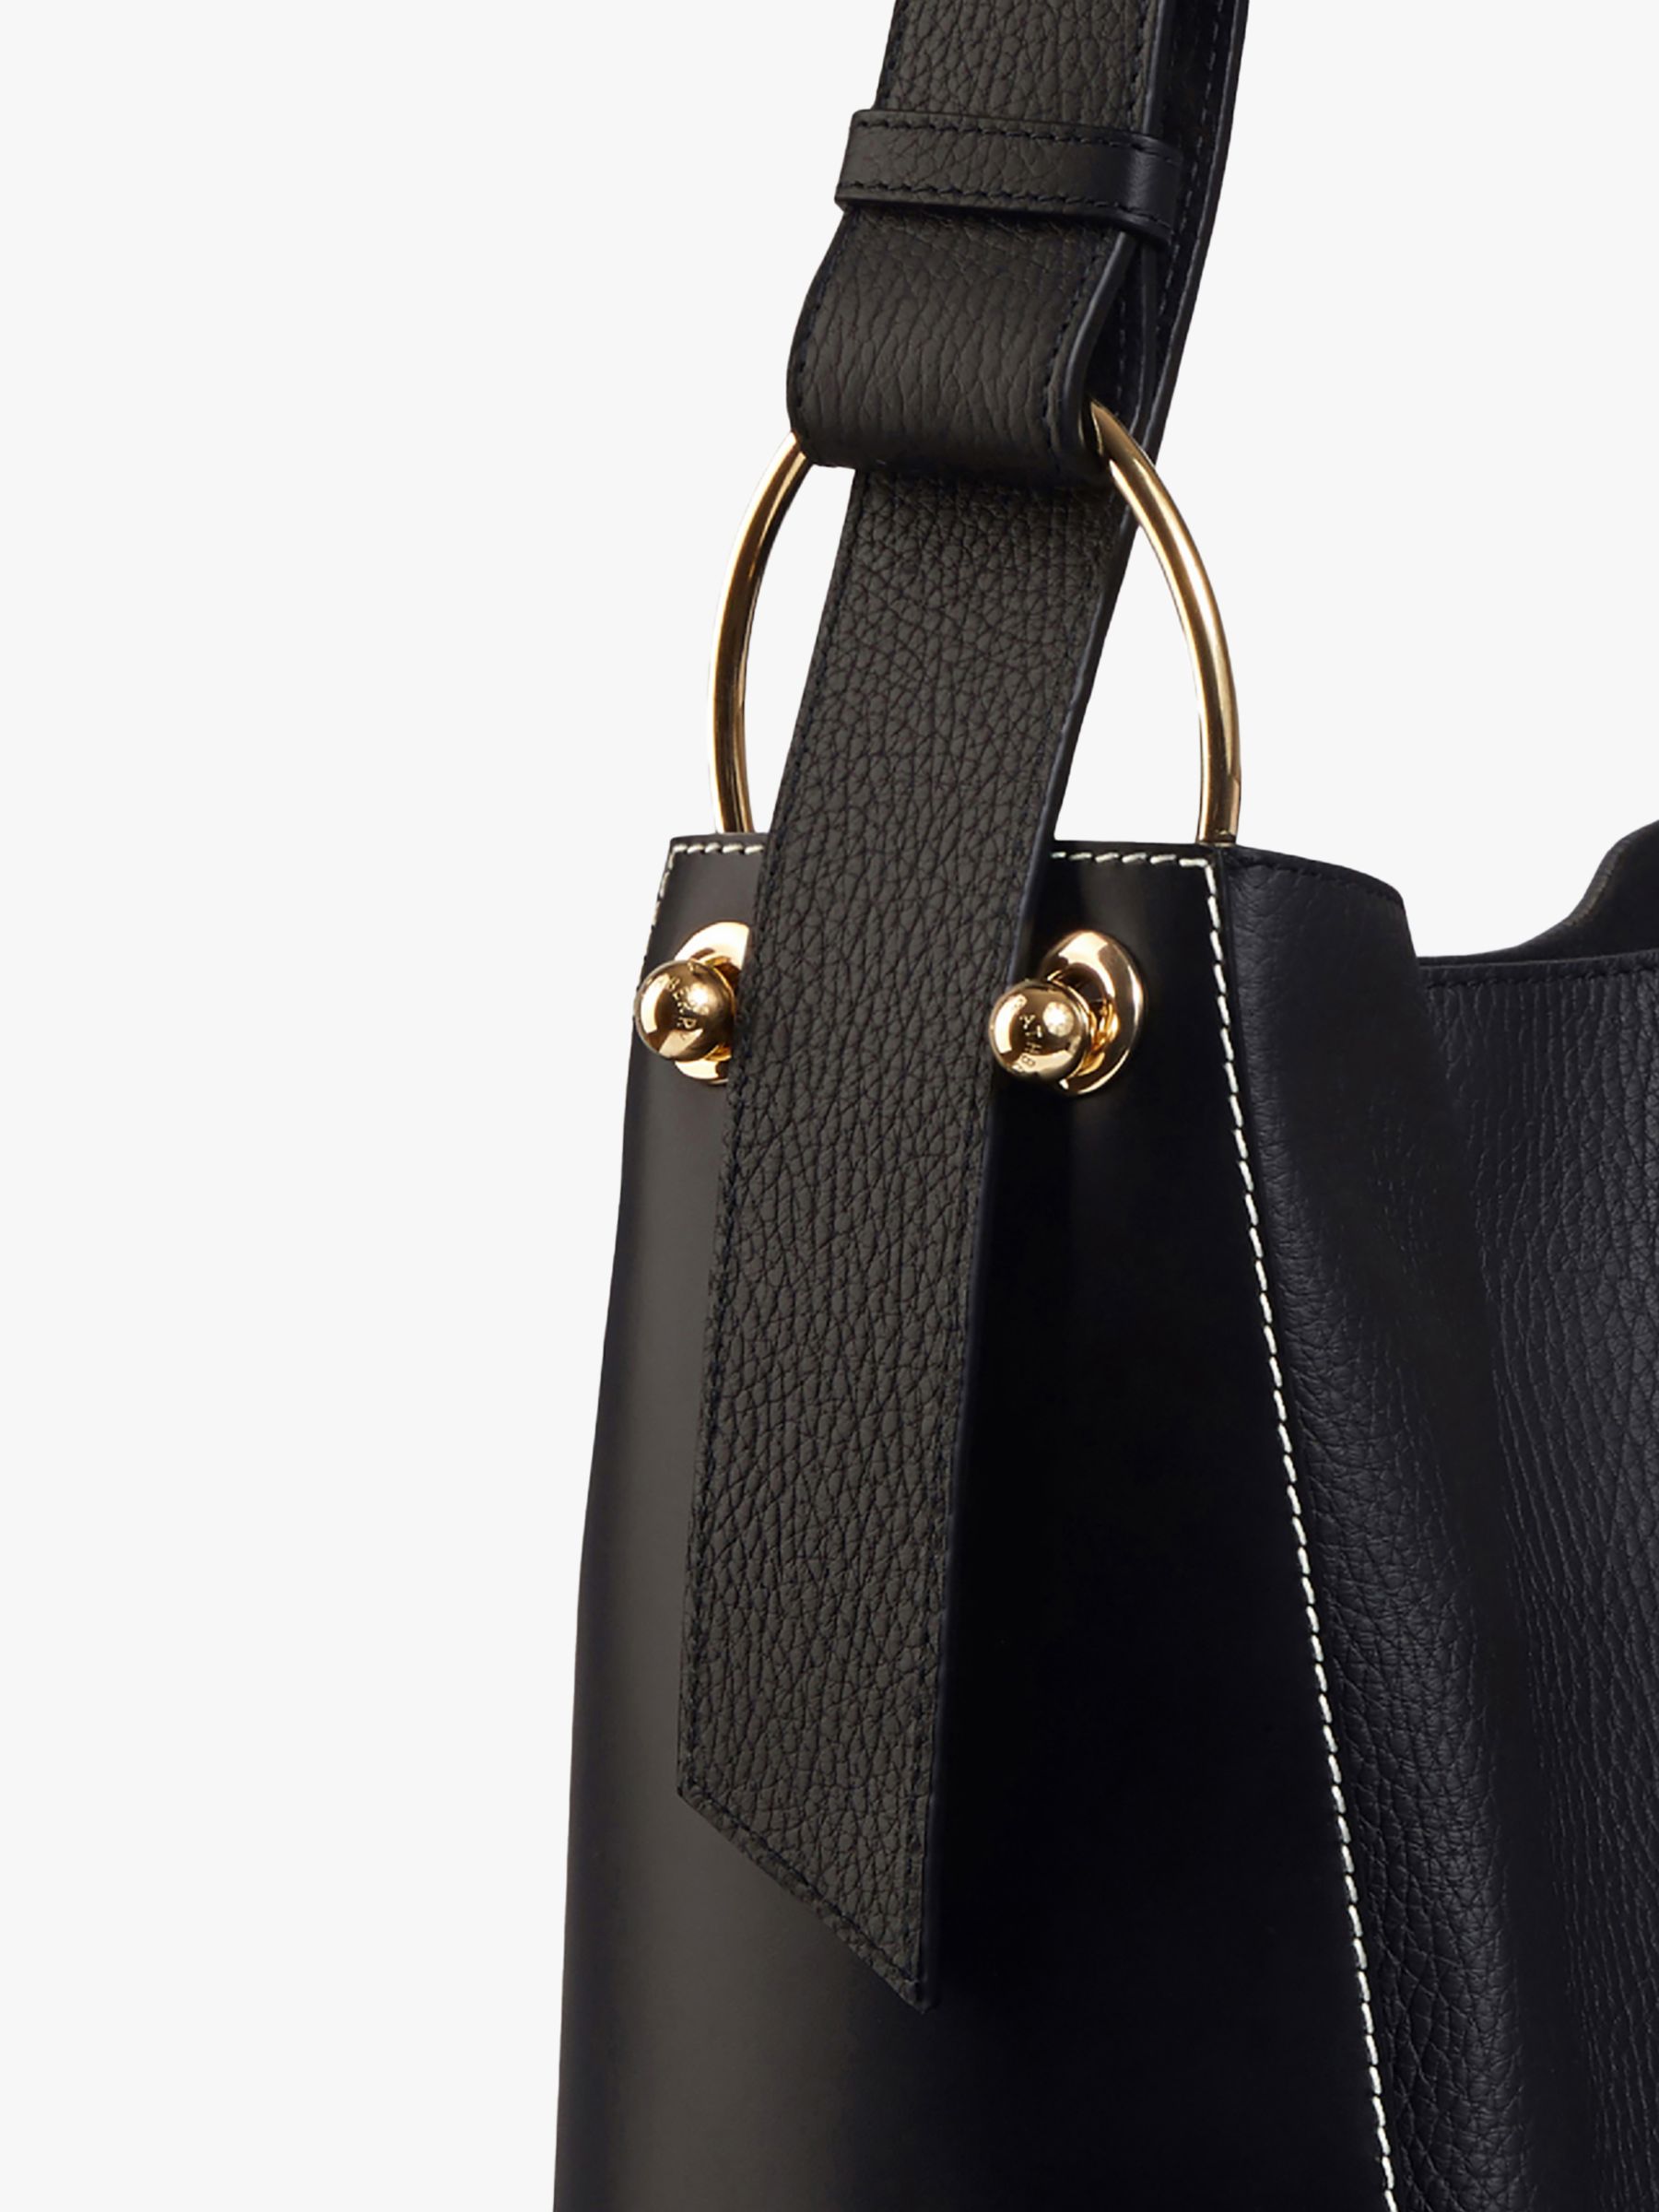 John Lewis & Partners Leather Zipped Bucket Bag, Black